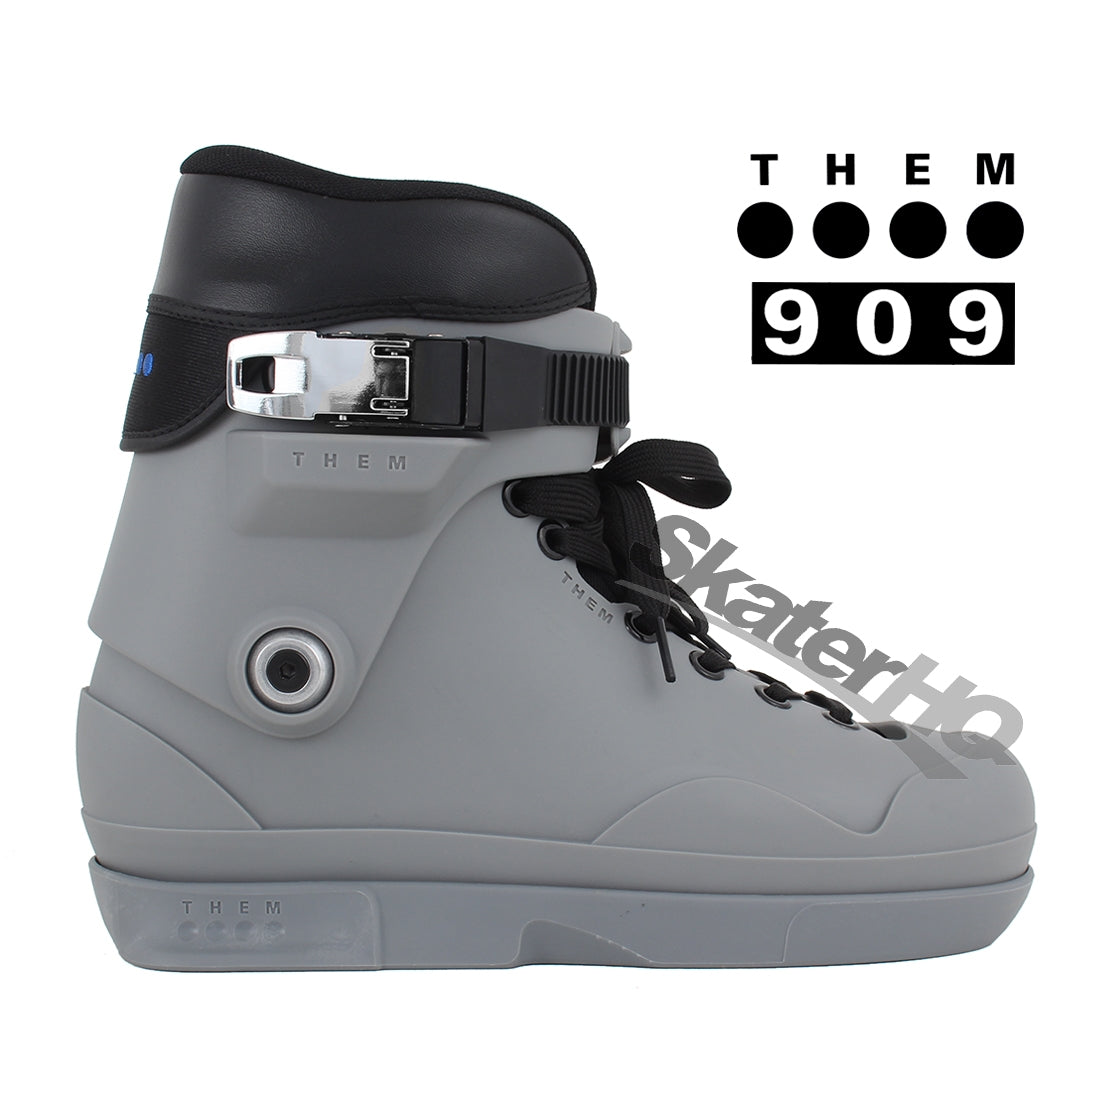 THEM 909 Boot Grey 7-8US Inline Aggressive Skates